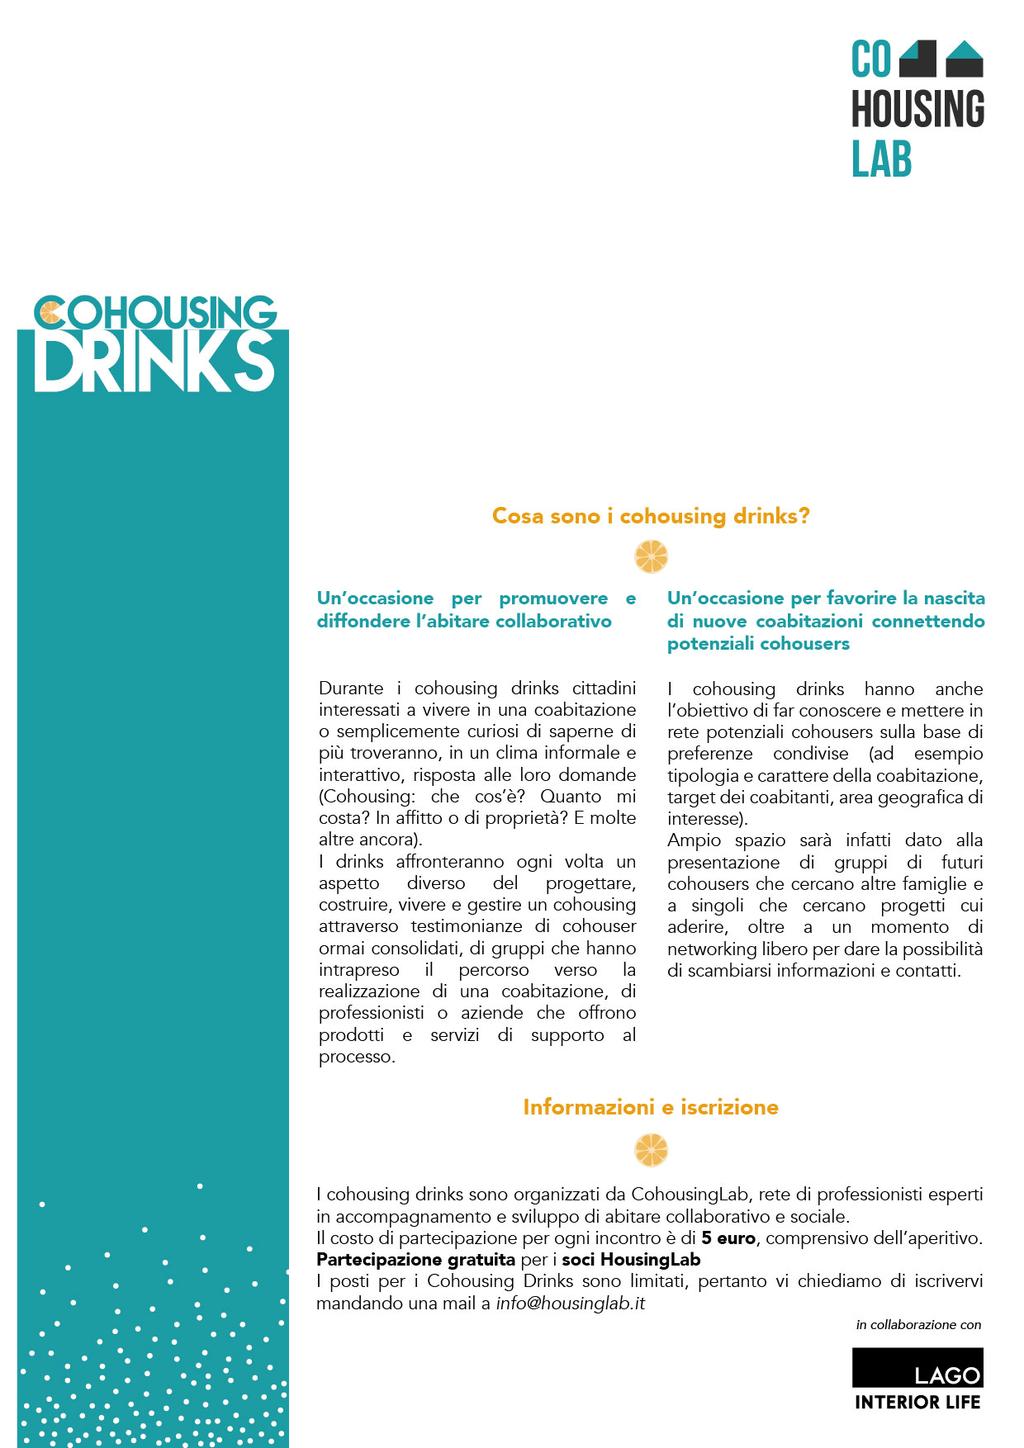 Cosa sono i Cohousing Drinks?